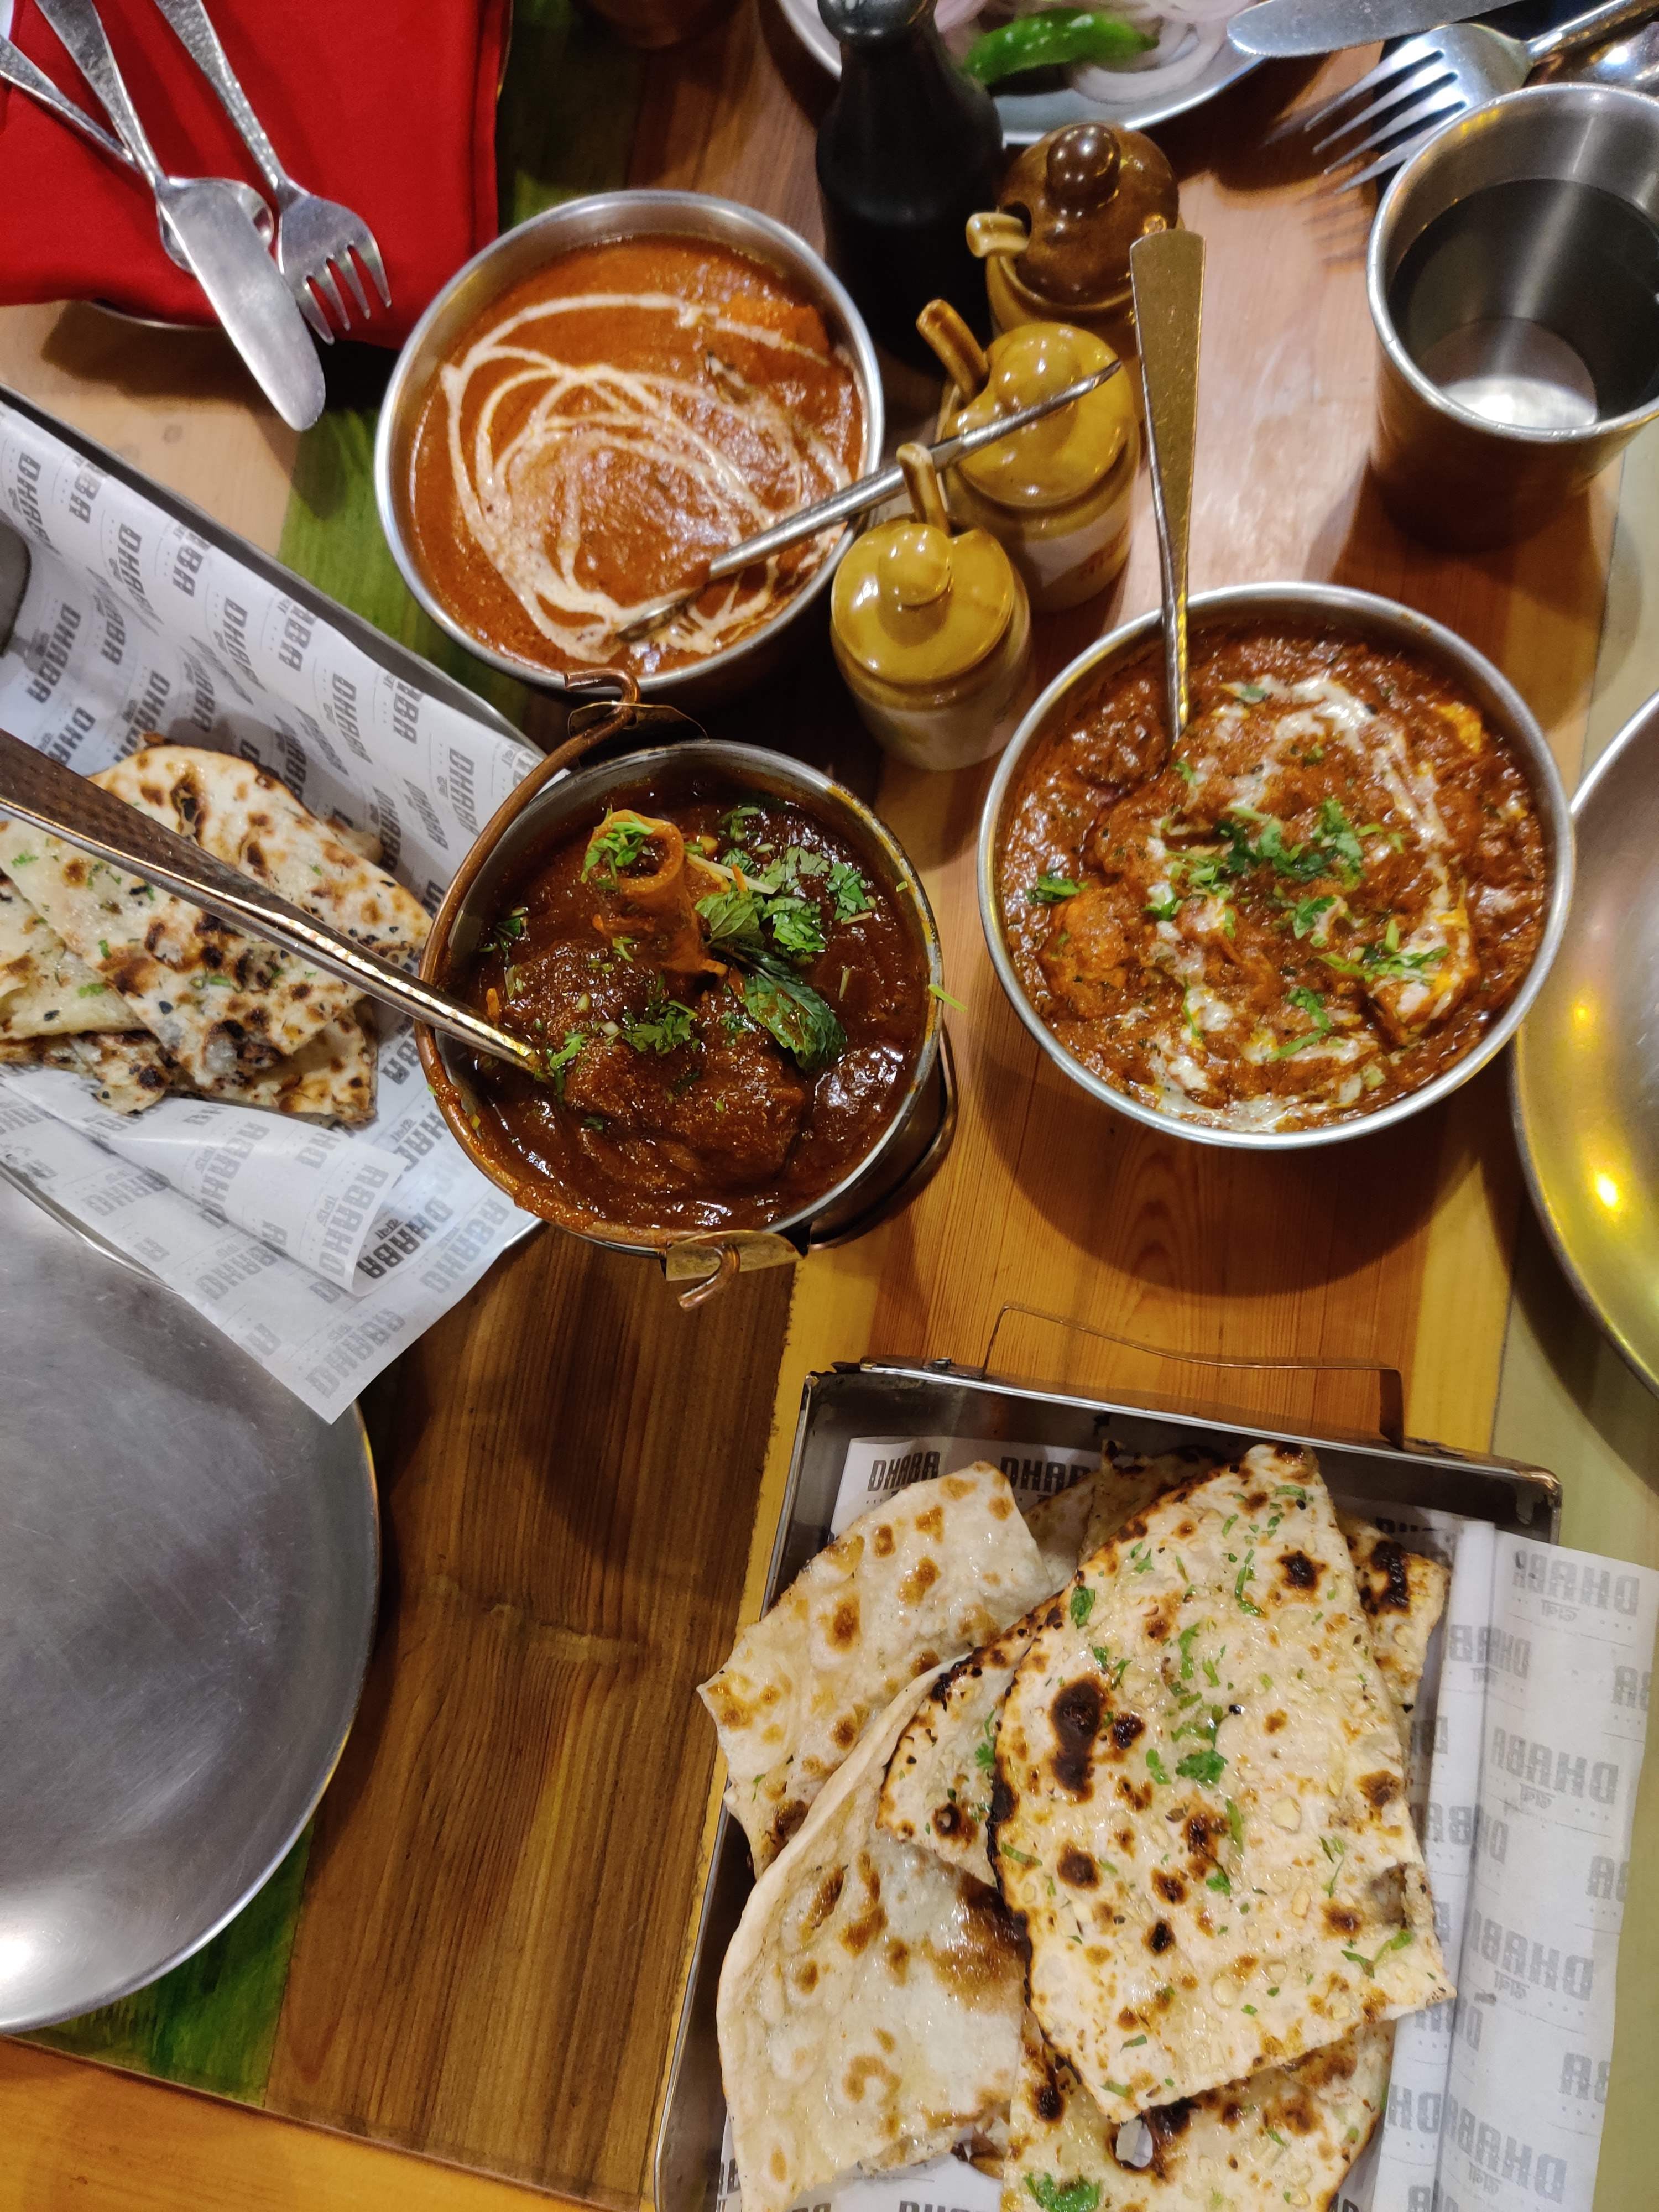 Dish,Food,Cuisine,Naan,Ingredient,Meal,Punjabi cuisine,Chapati,Flatbread,Produce